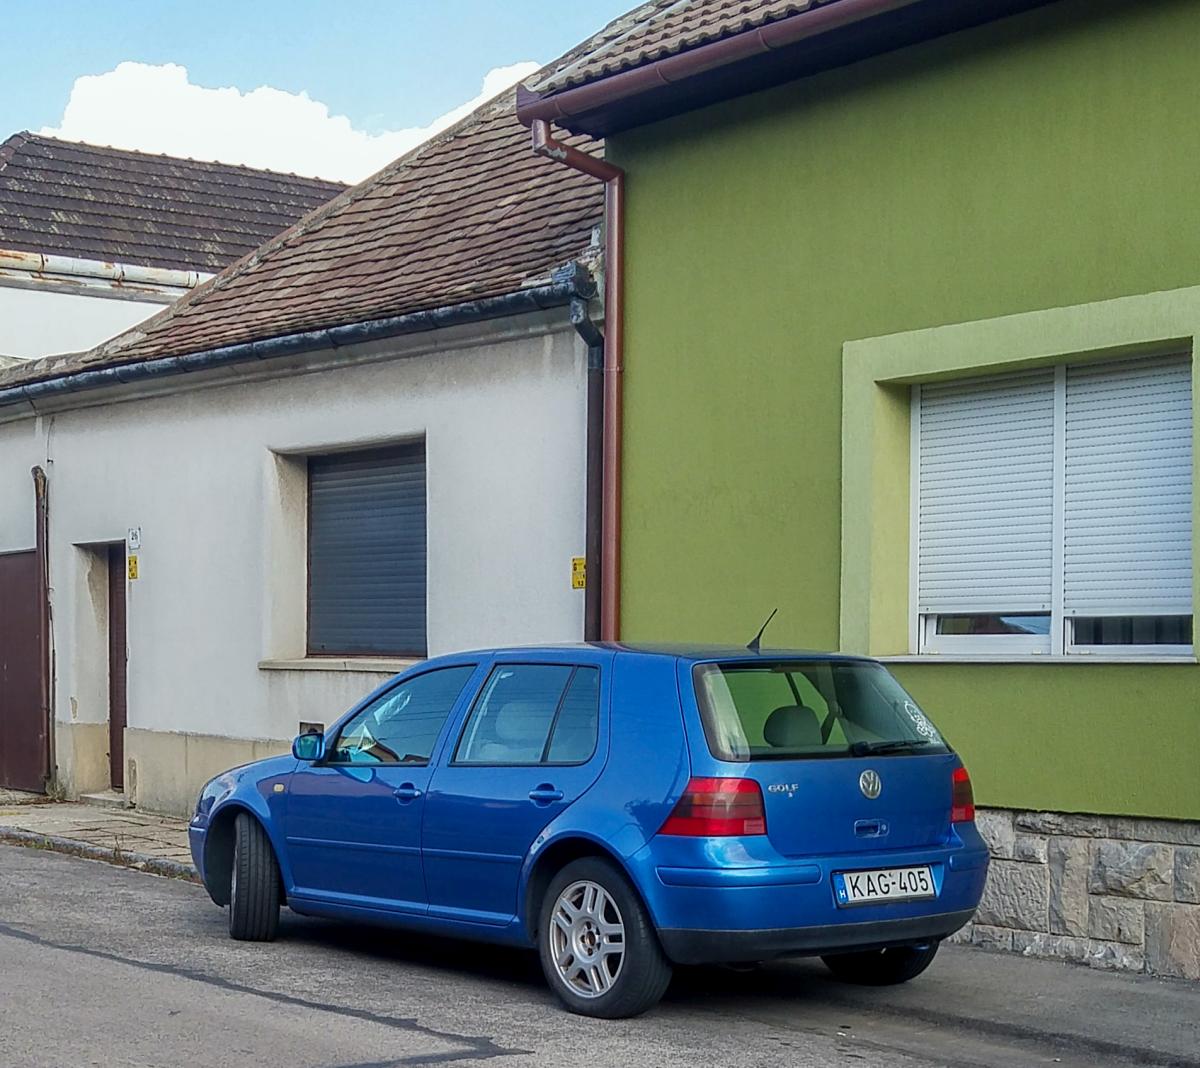 VW Golf IV. Foto: Sommer, 2019 Pécs (HU).